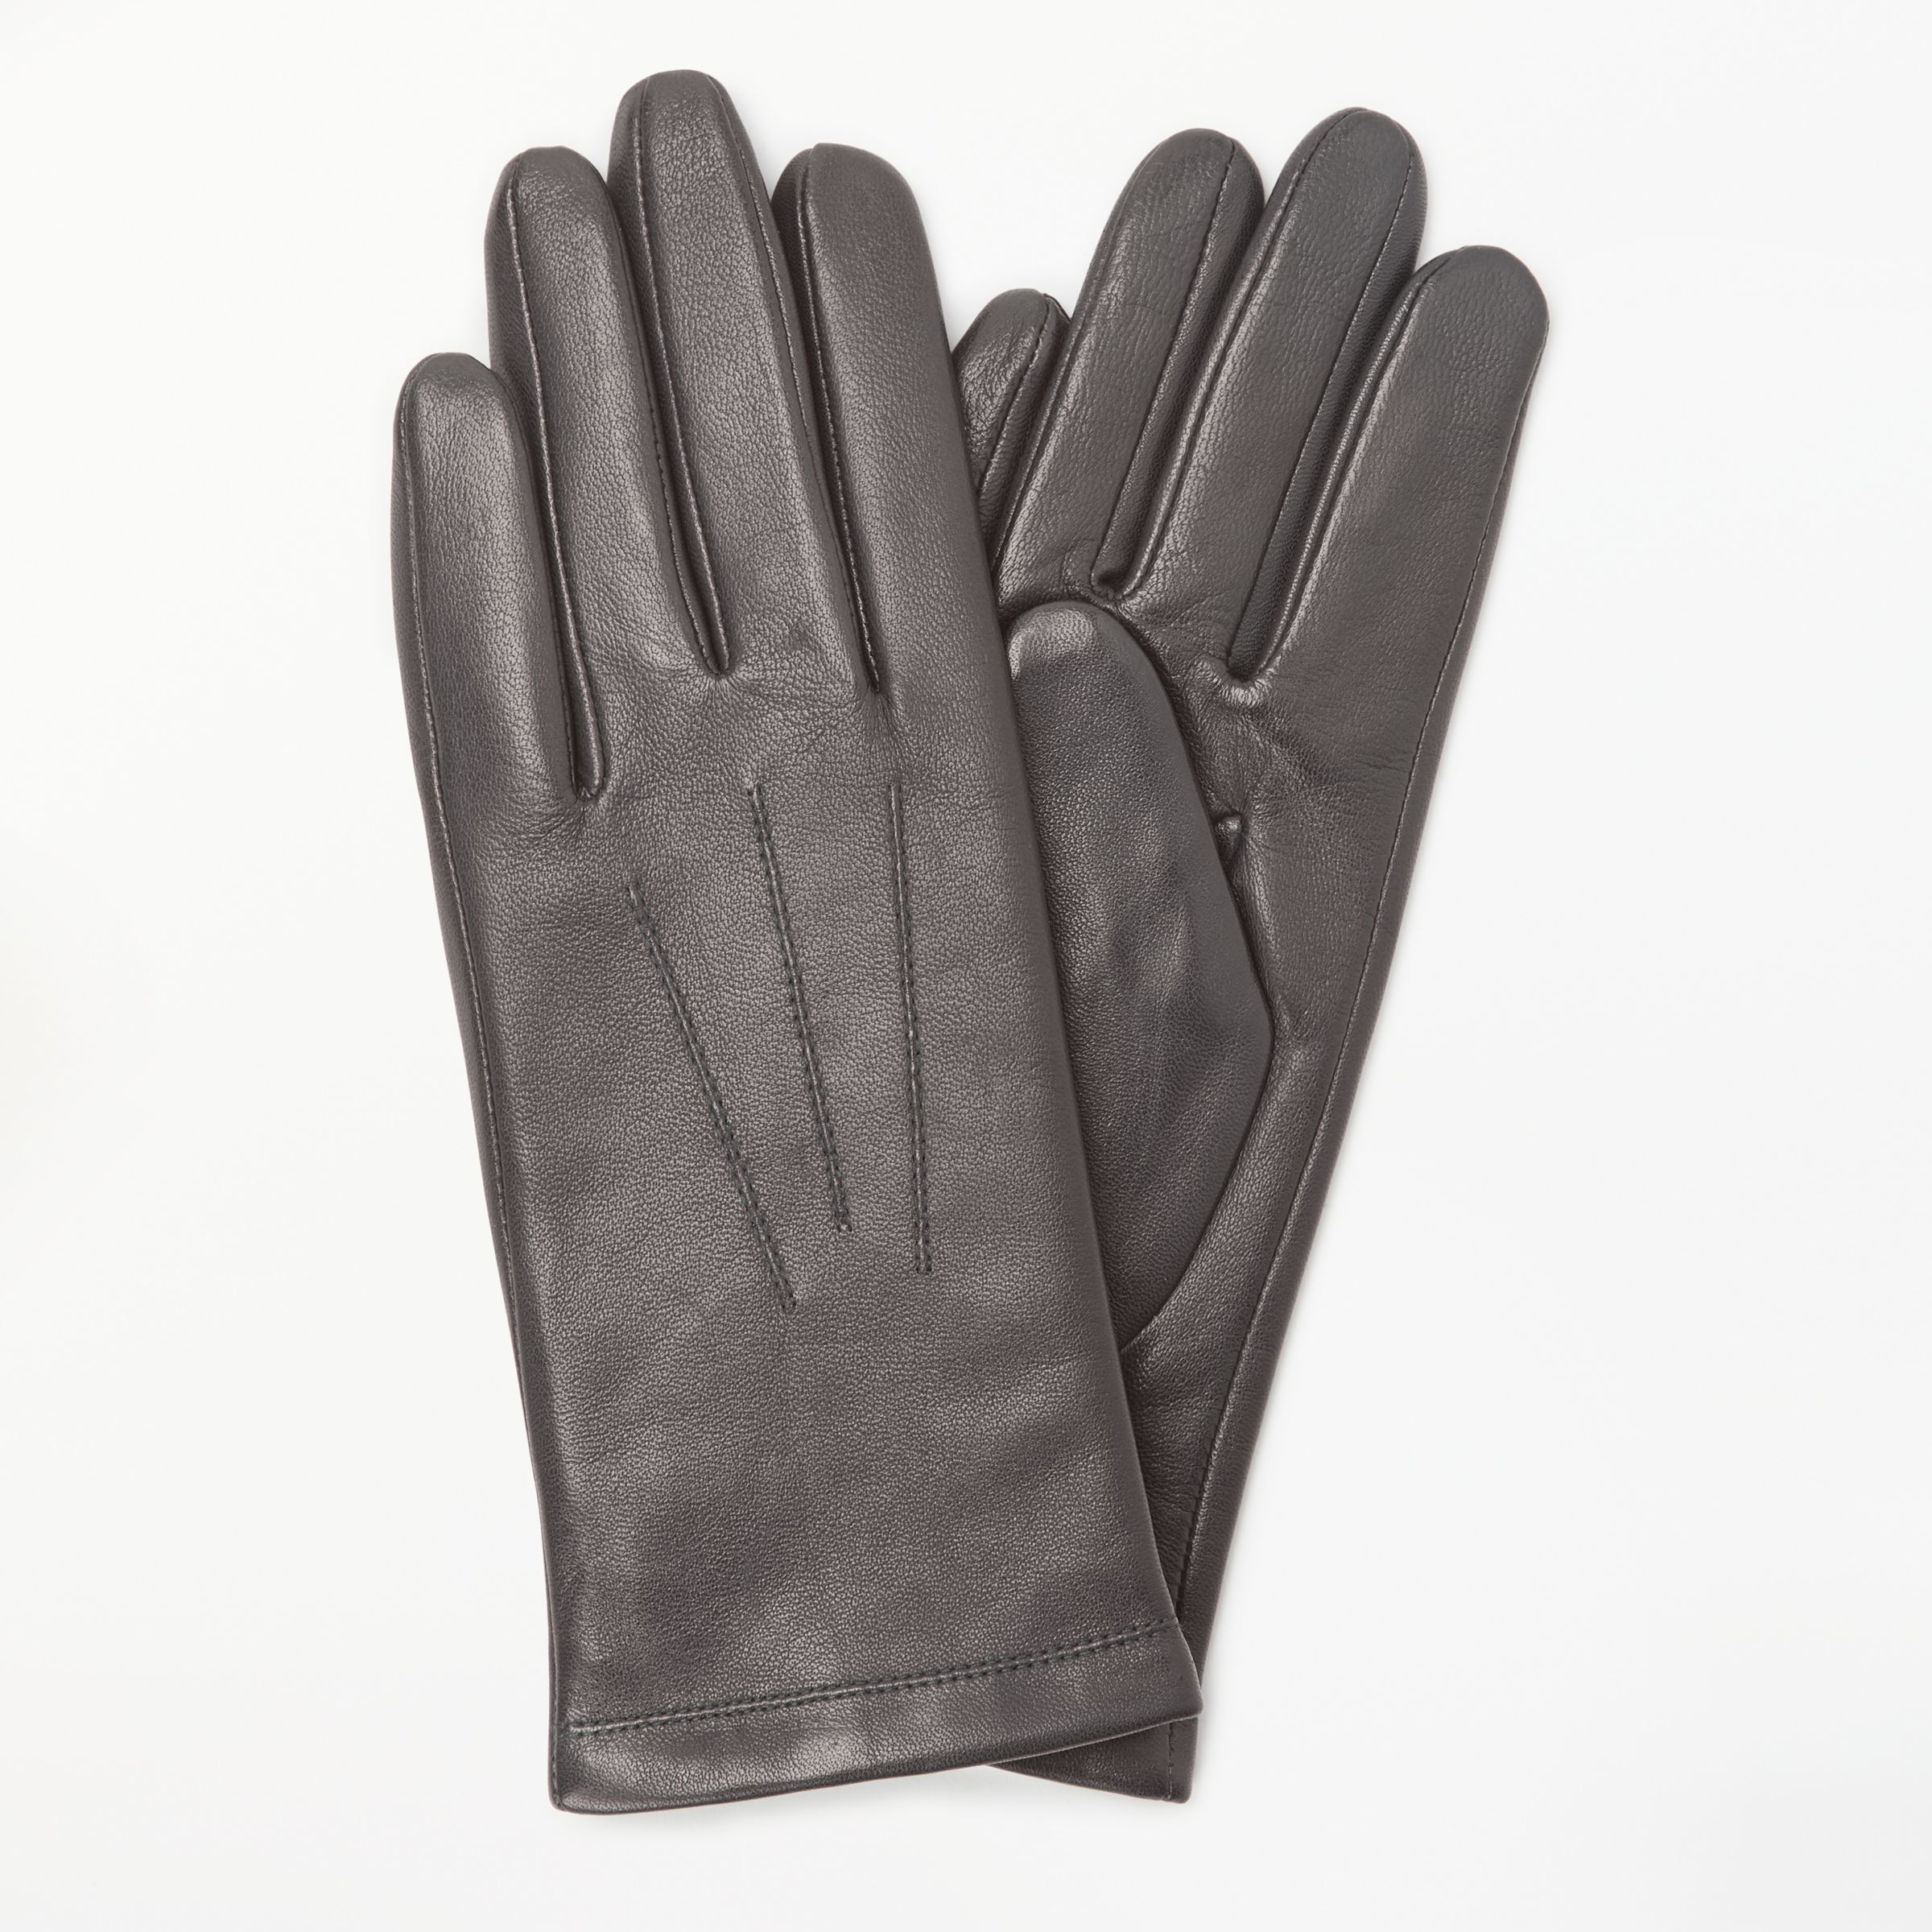 John Lewis & Partners Leather Fleece Lined Gloves